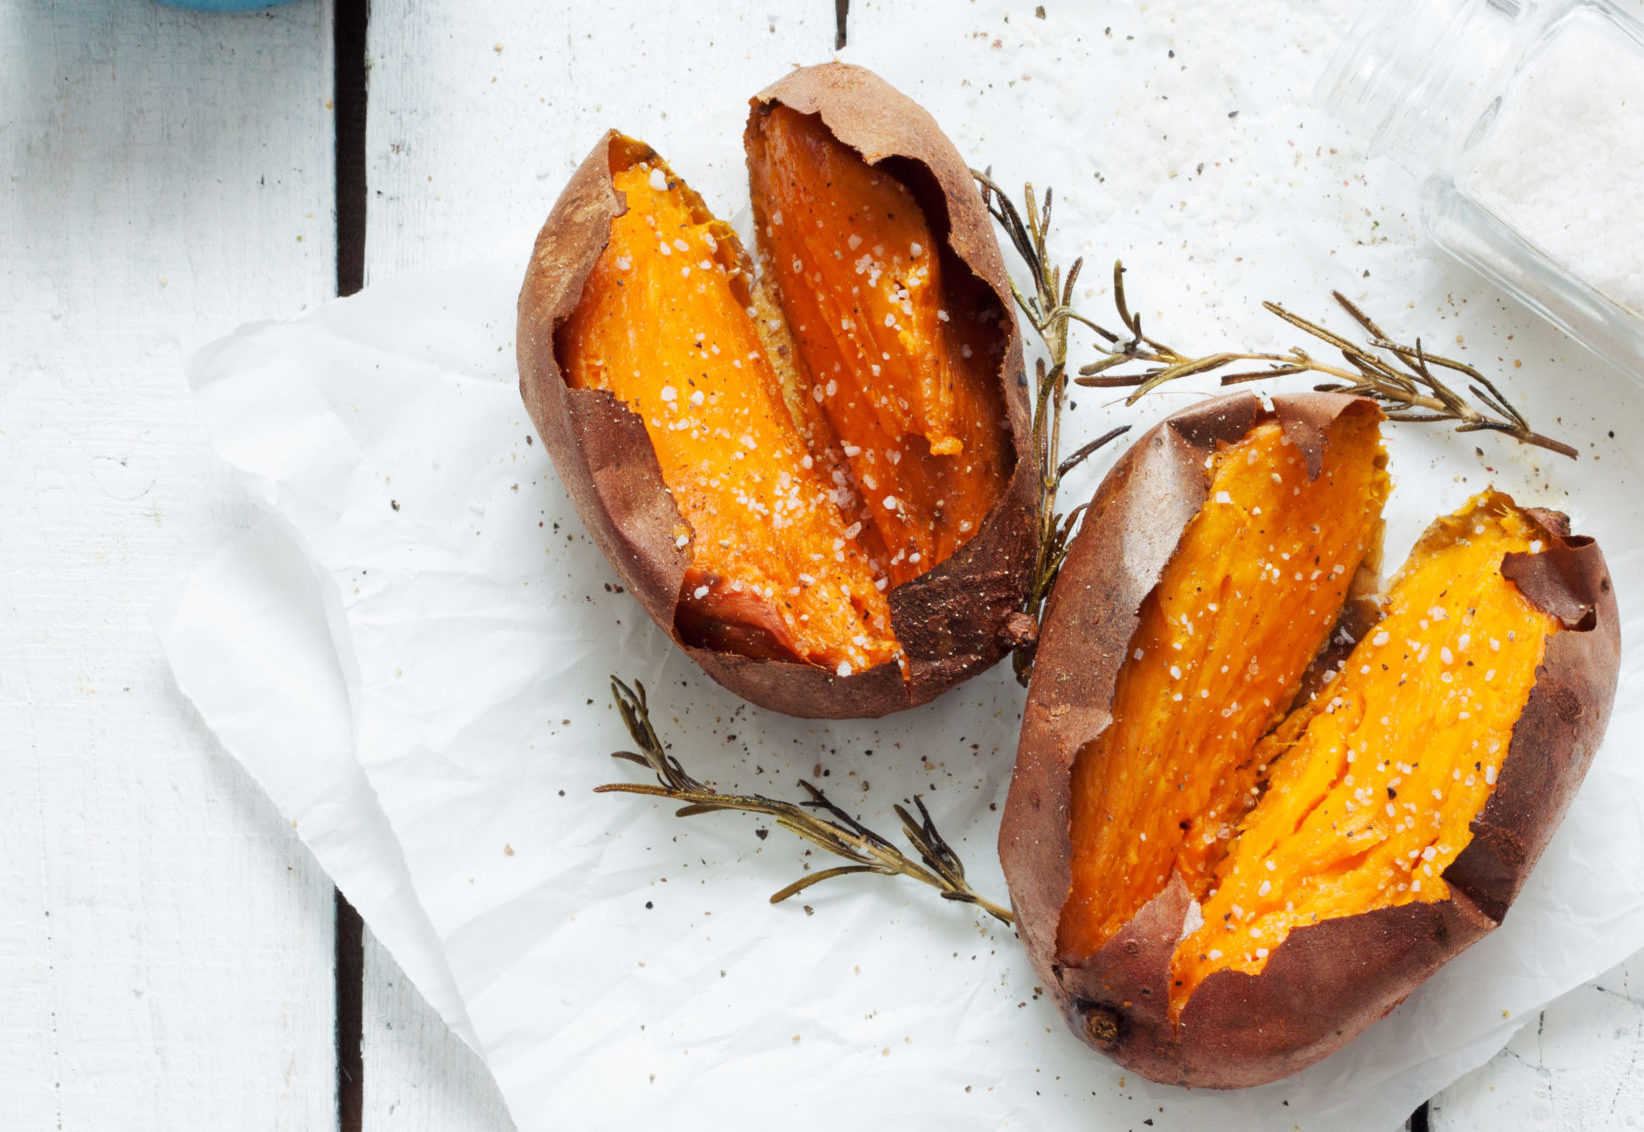 You Should Freeze Sweet Potatoes Before Roasting